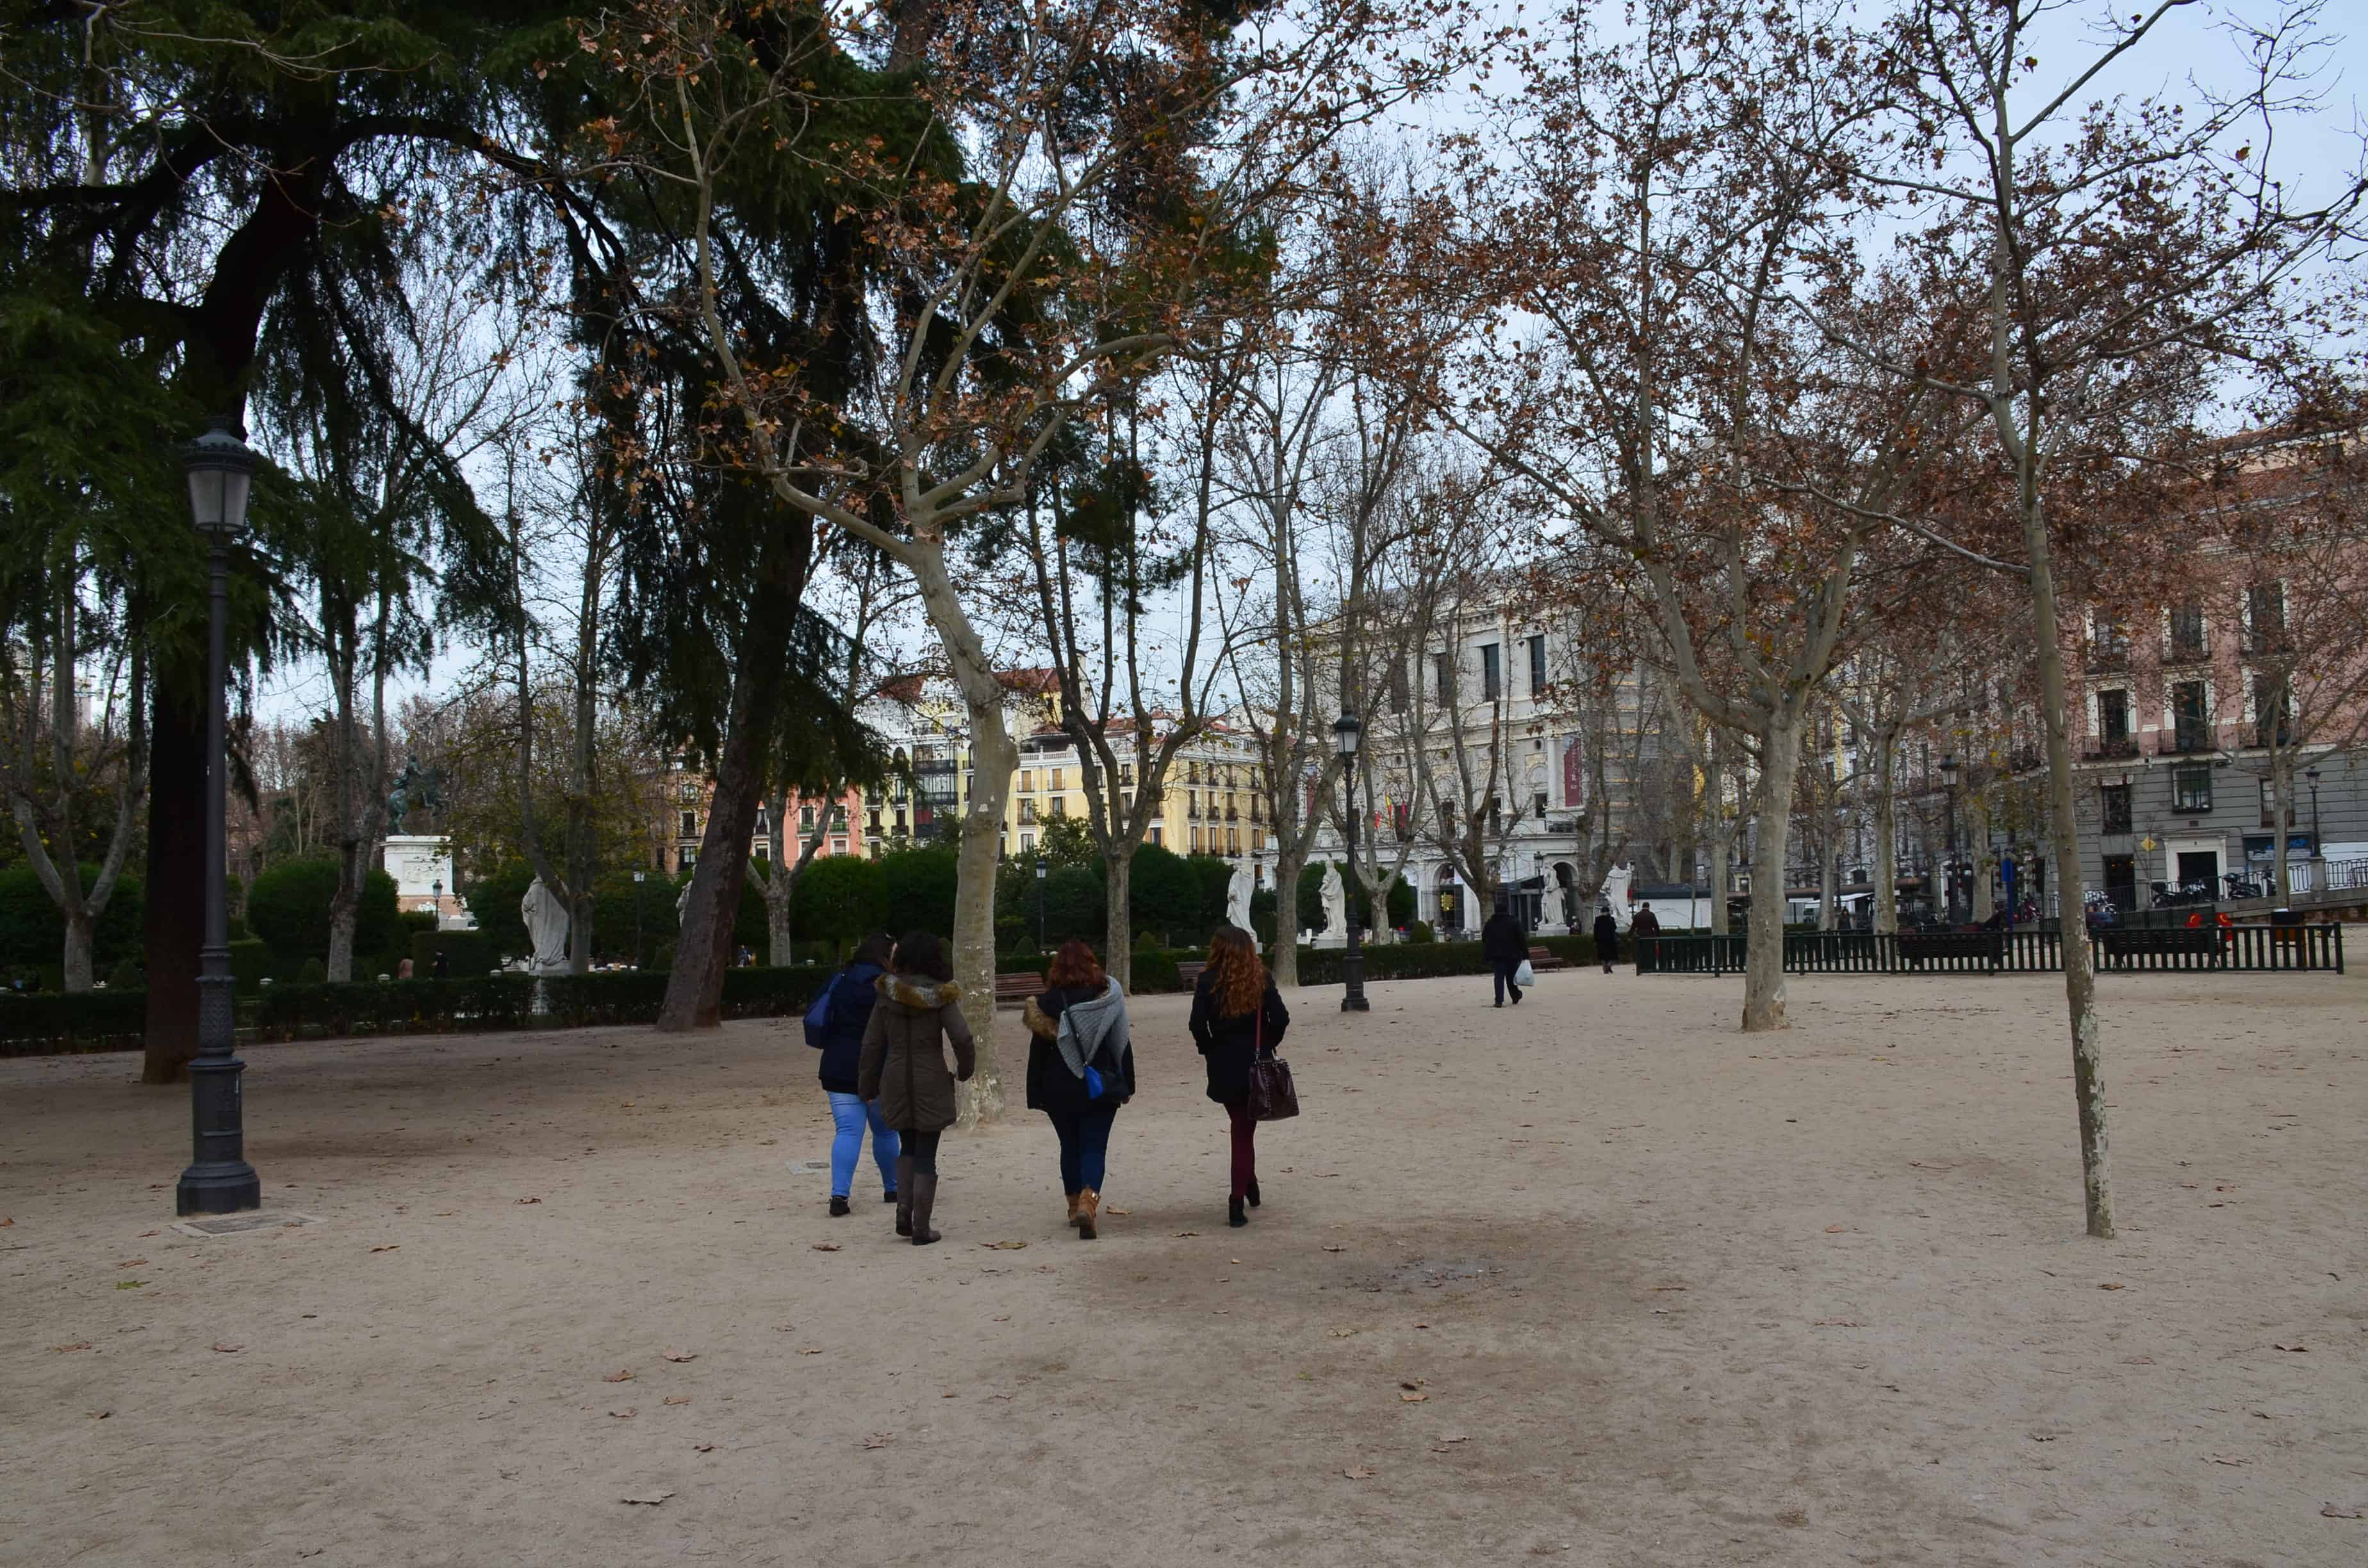 Lepanto Gardens at Plaza de Oriente in Madrid, Spain